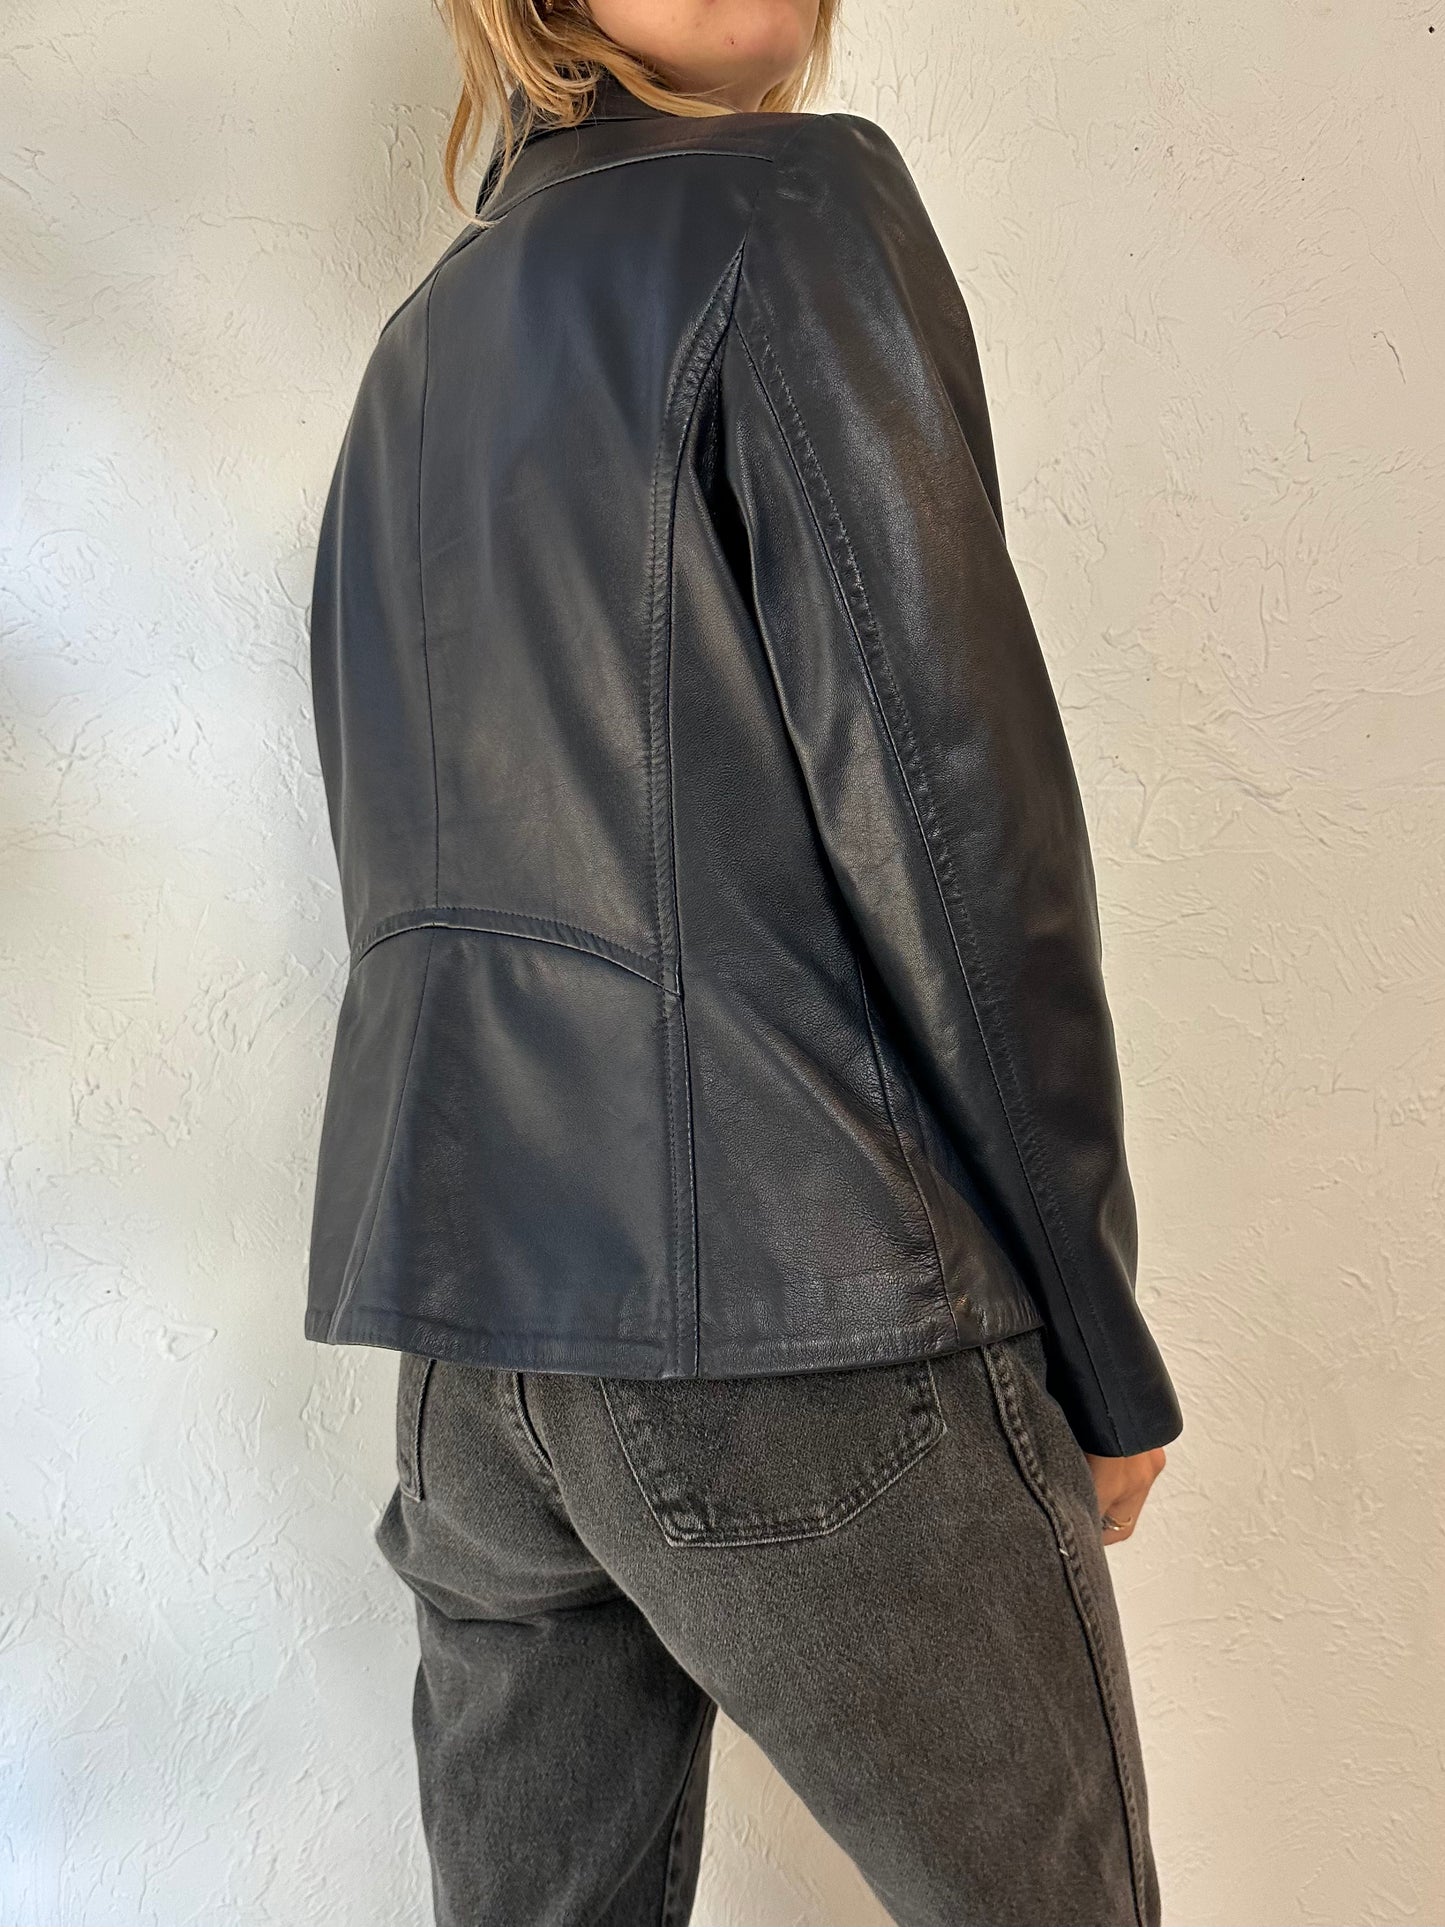 90s 'Danier' Fitted Black Leather Jacket / Medium